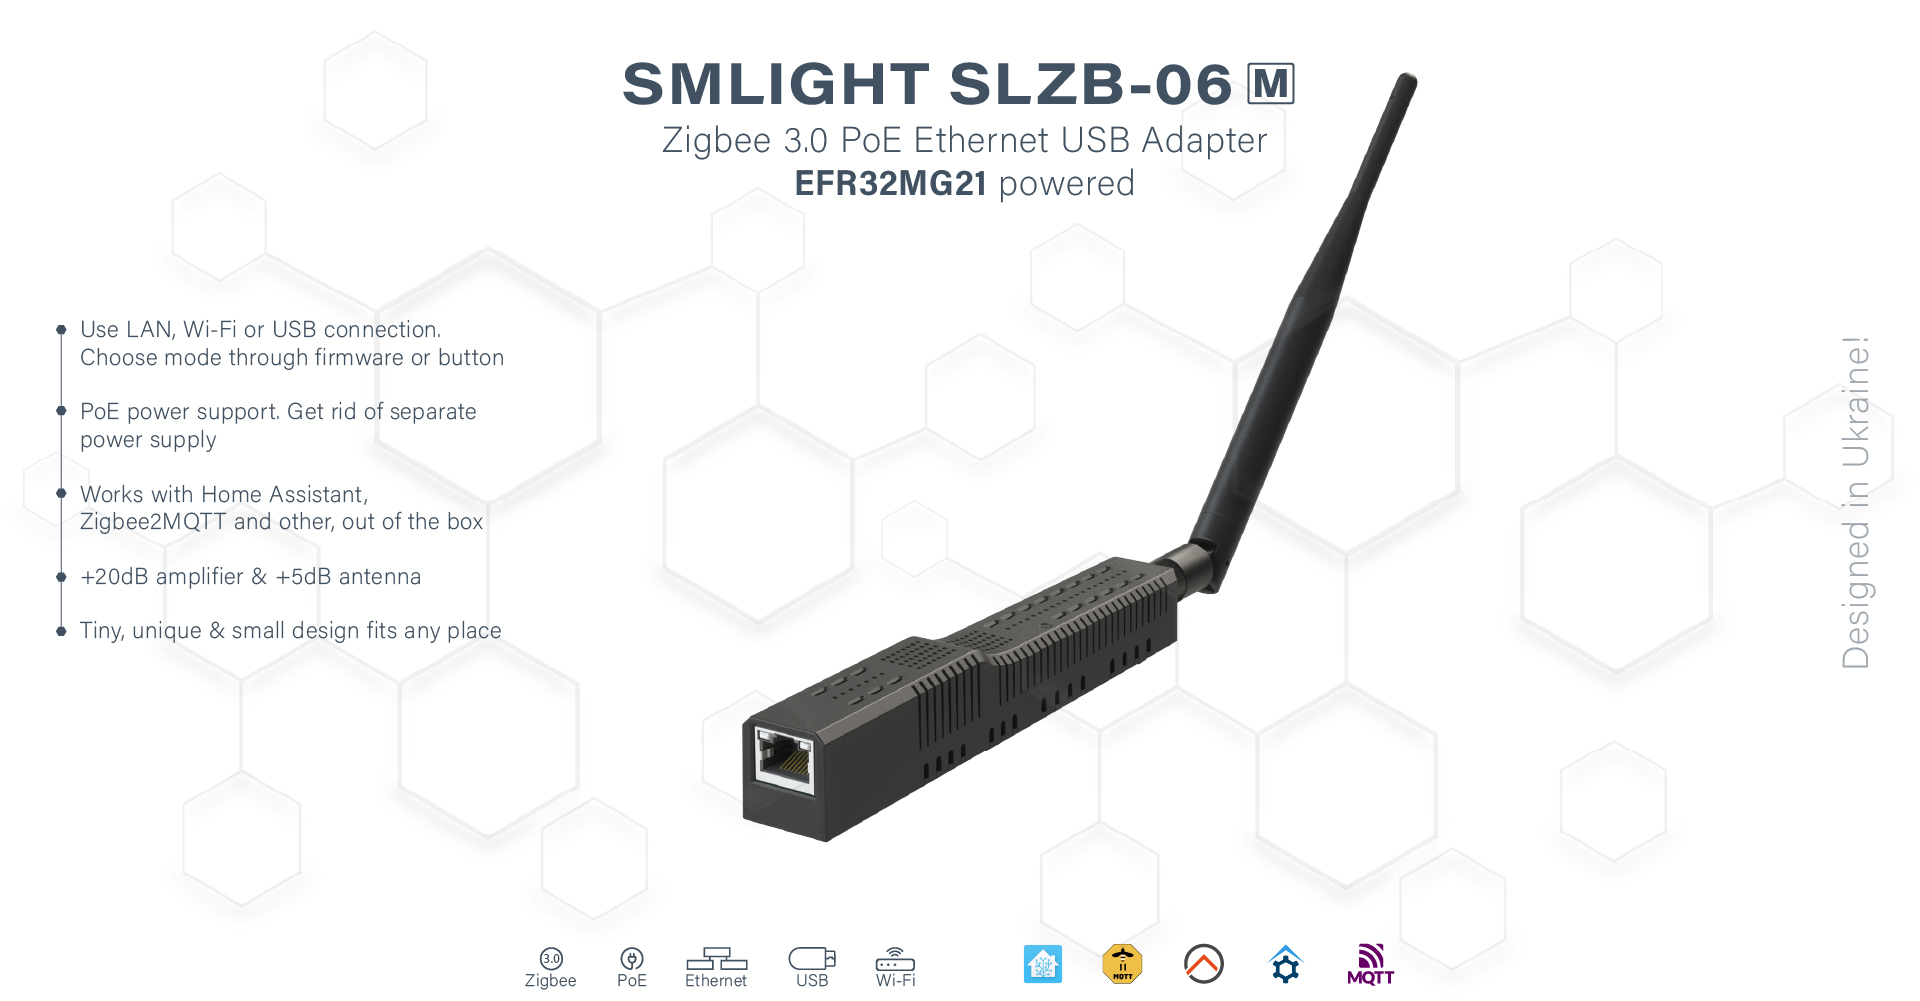 SMLIGHT SLZB-06 Zigbee Ethernet PoE USB WiFi Adapt from SMARTLIGHT.ME on  Tindie